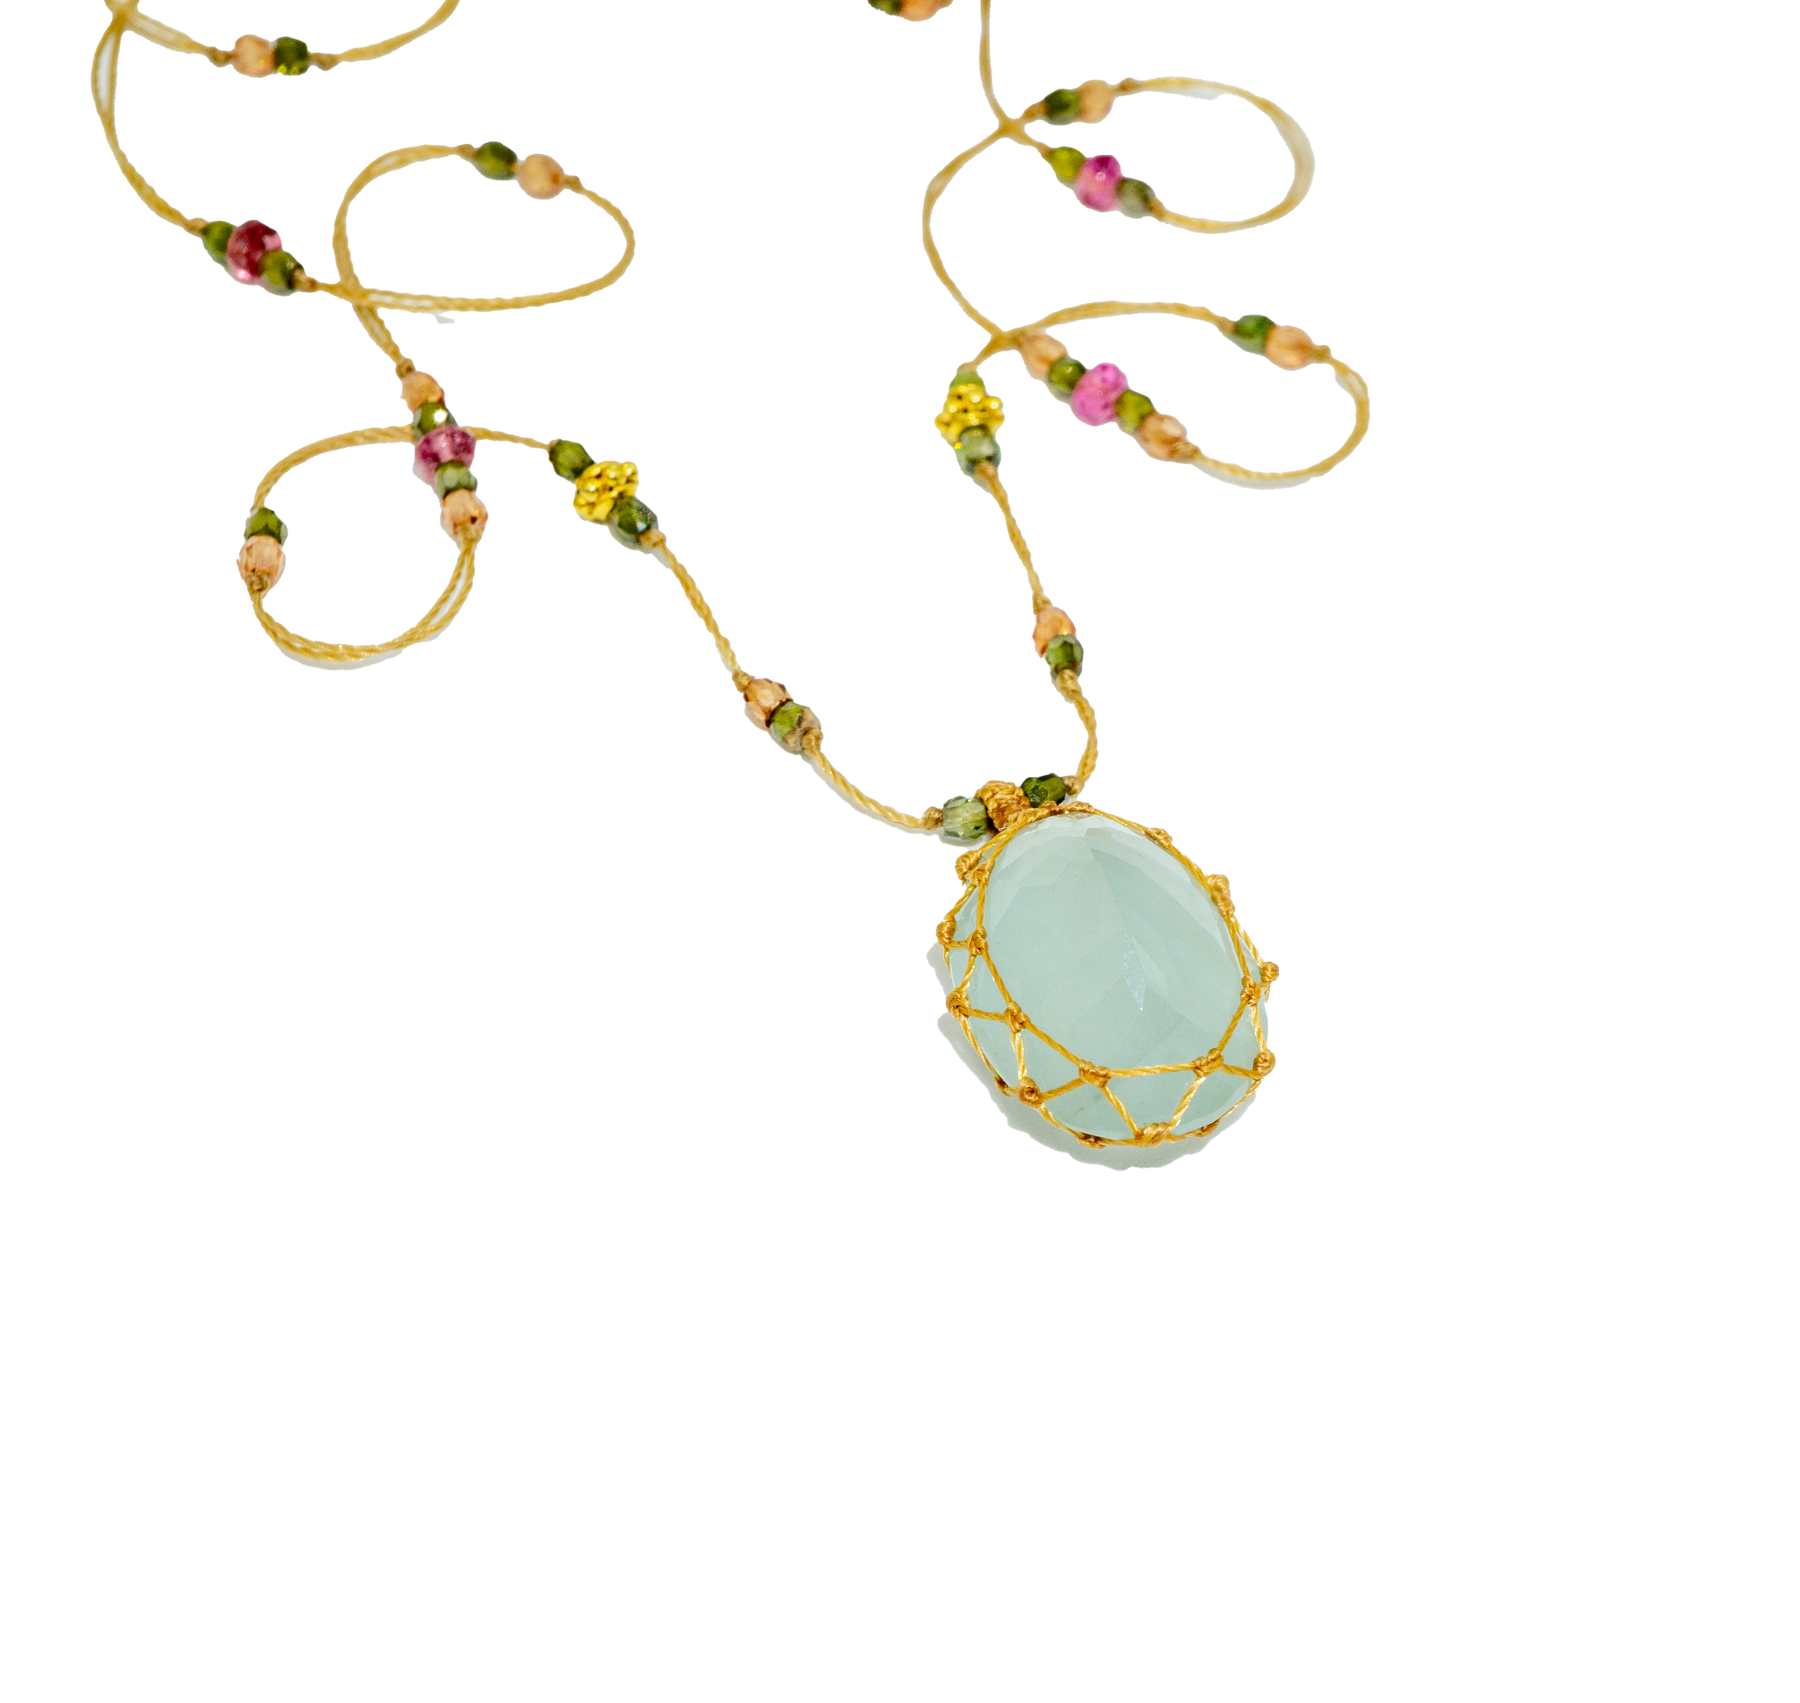 So Precious Tibetan Short Necklace - Aquamarine - Mix Pink Tourmaline - Beige Thread